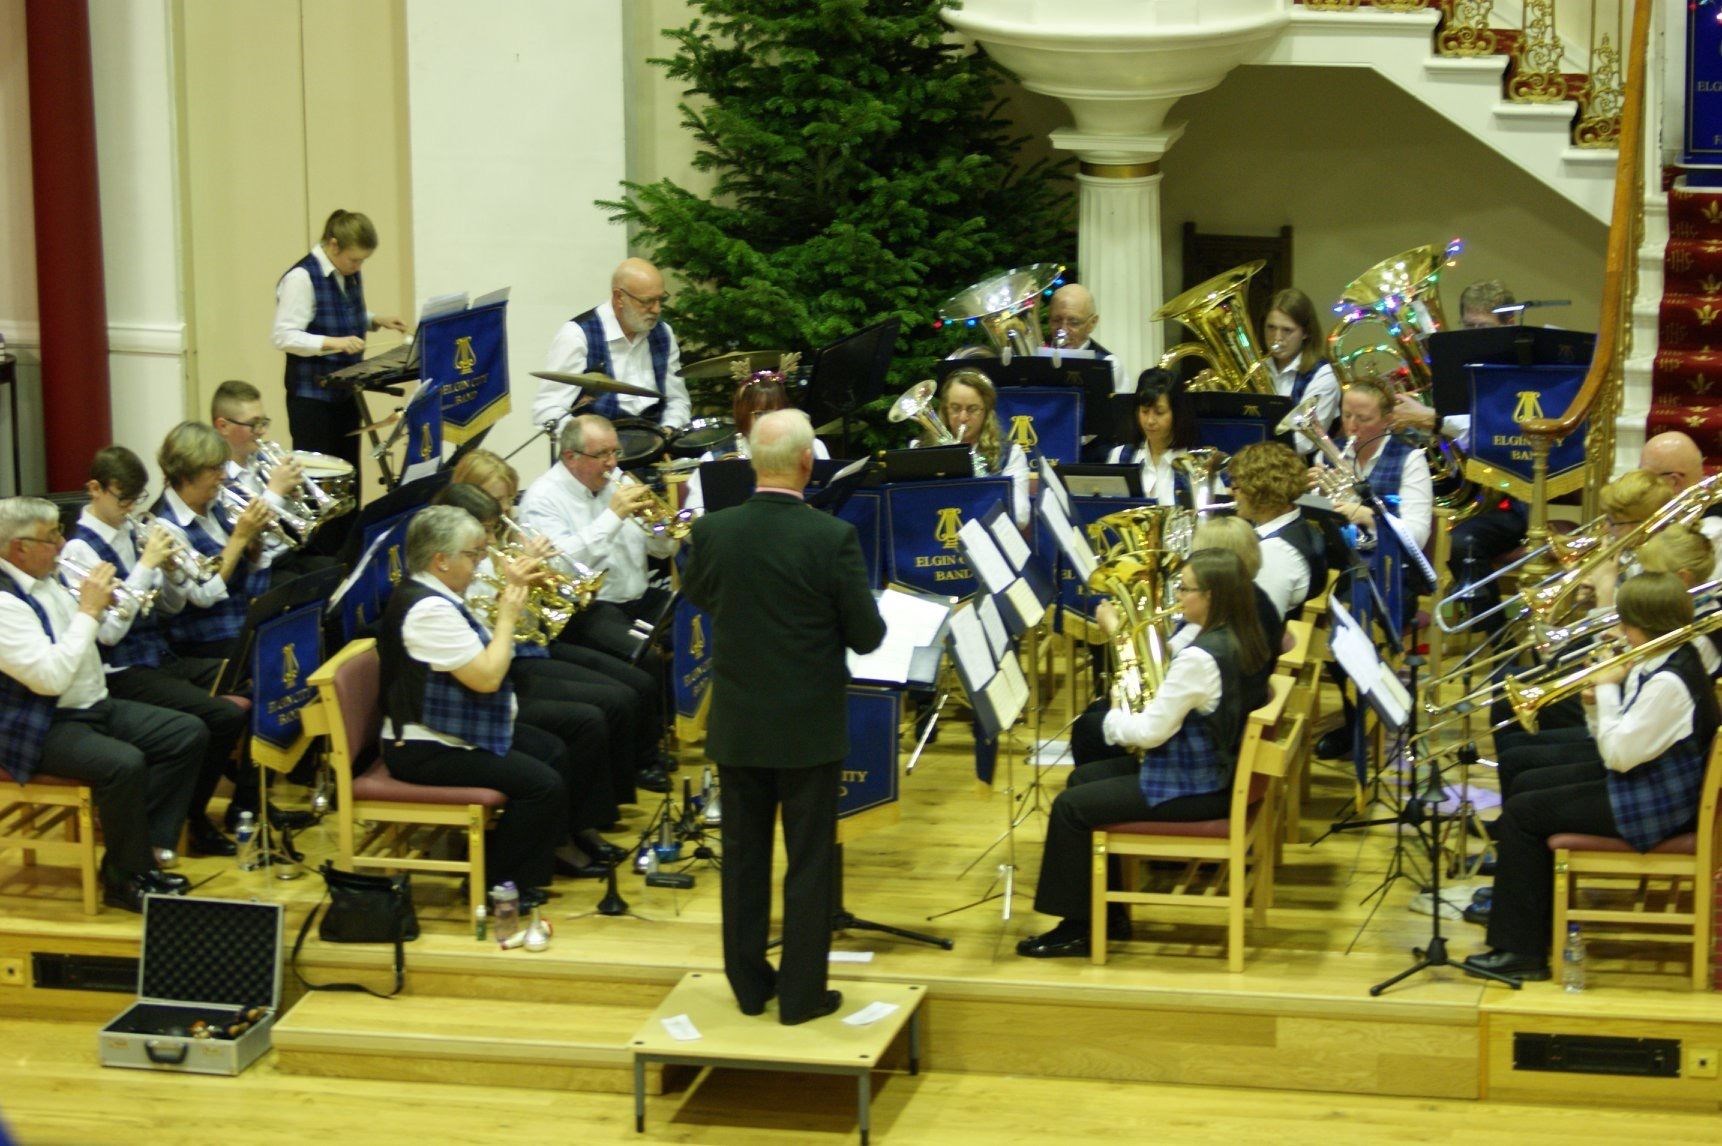 Members of Elgin City Band, led by Bob Garrity, perform at St Giles Church.